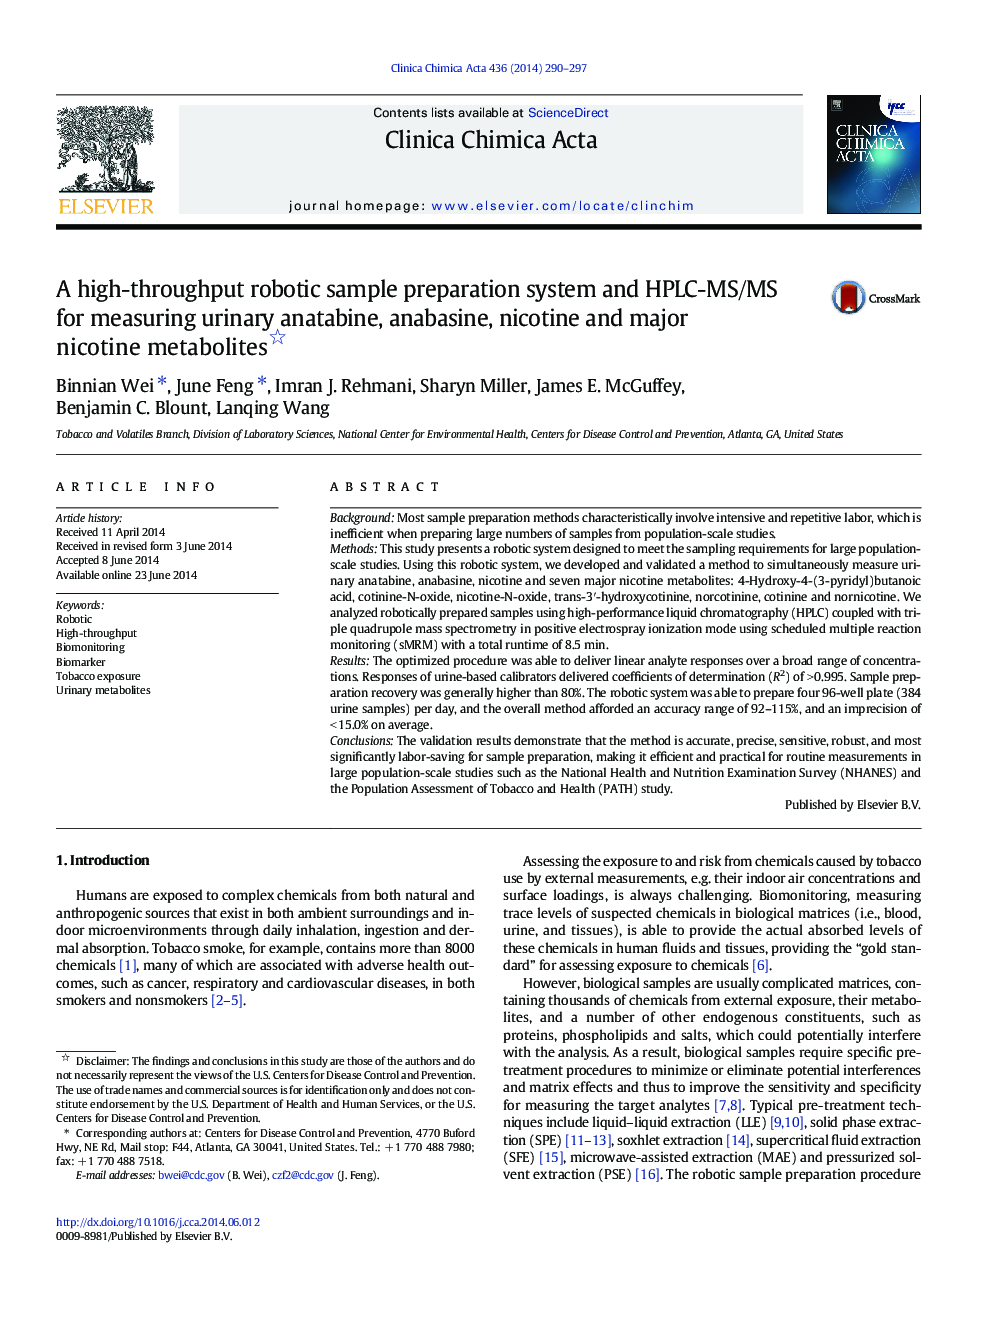 A high-throughput robotic sample preparation system and HPLC-MS/MS for measuring urinary anatabine, anabasine, nicotine and major nicotine metabolites